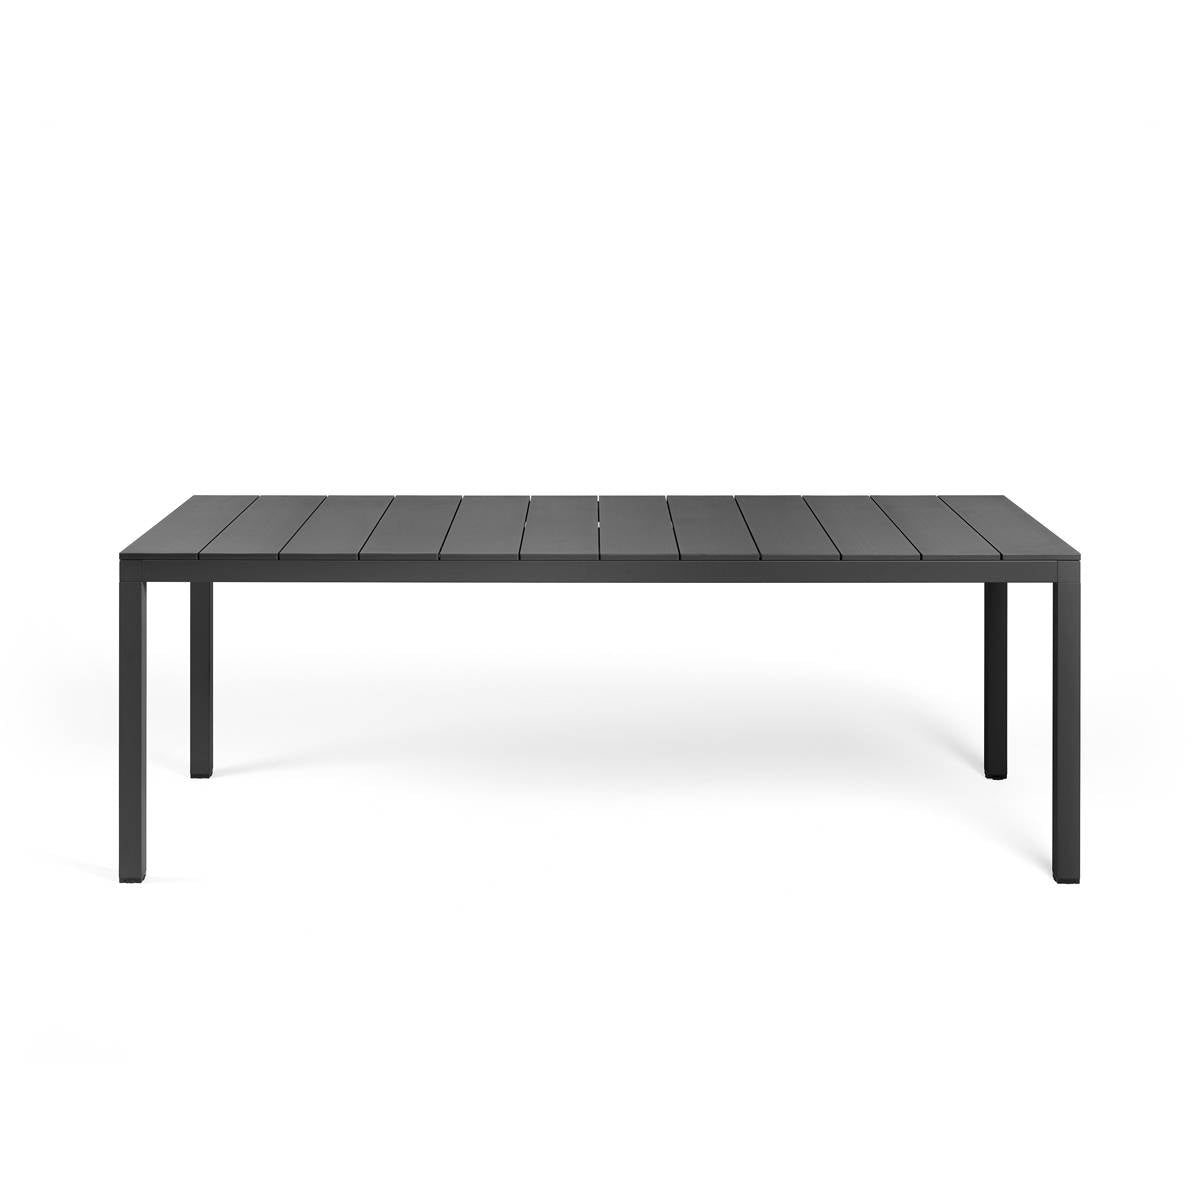 Nardi - Garden table Rio aluminum 210cm Fix 